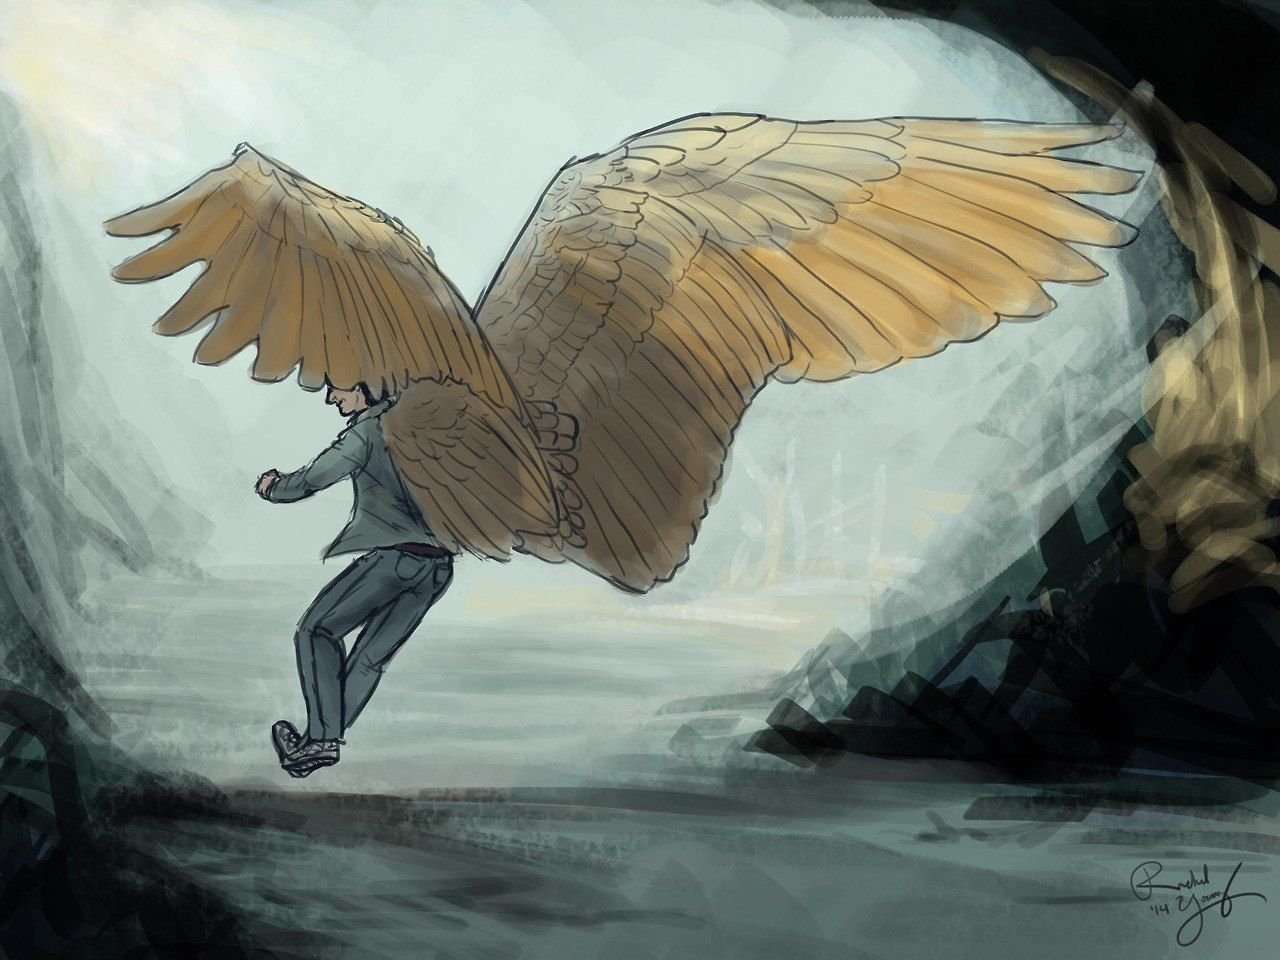 Крылатое далеко. Человек с крыльями. Человек с крыльями арт. Человек птица арт. Человек с крыльями птицы.